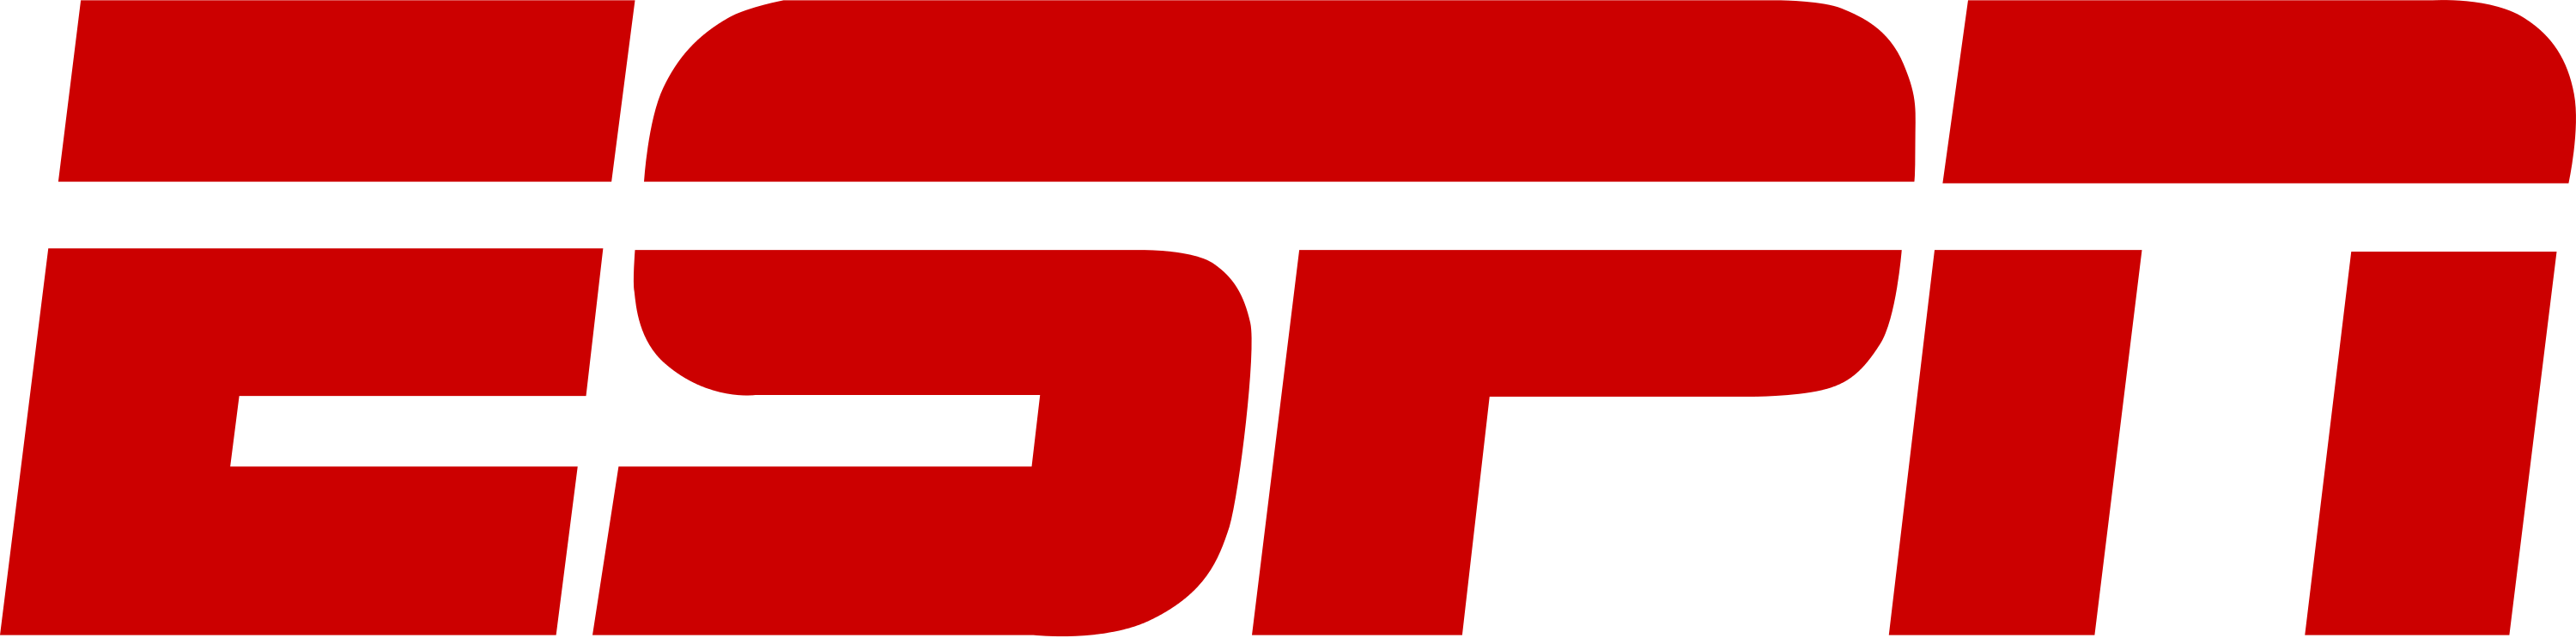 ESPN شعار PNG صورة HQ